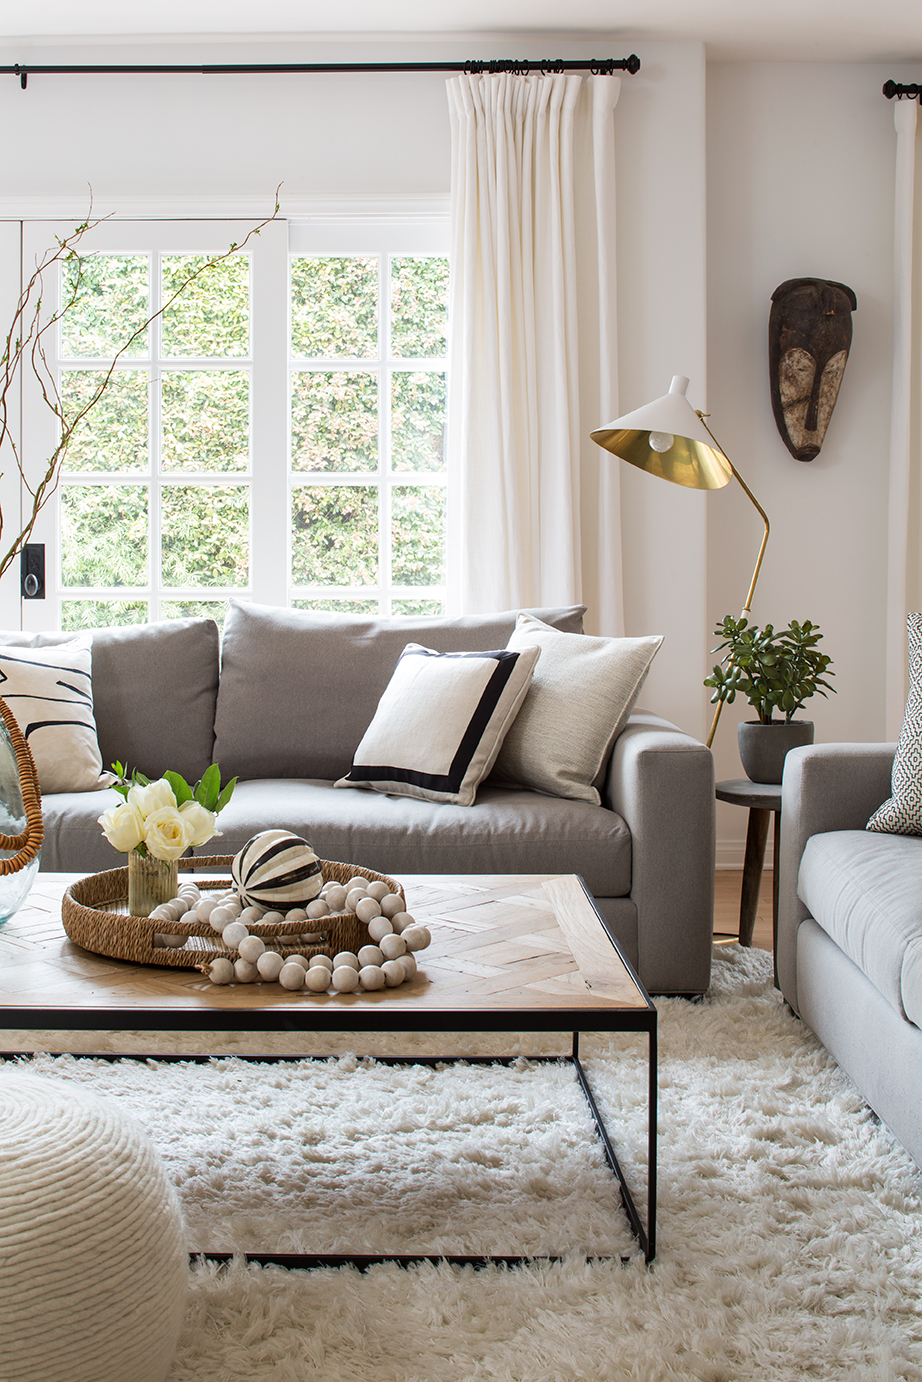 Bright-designed living room